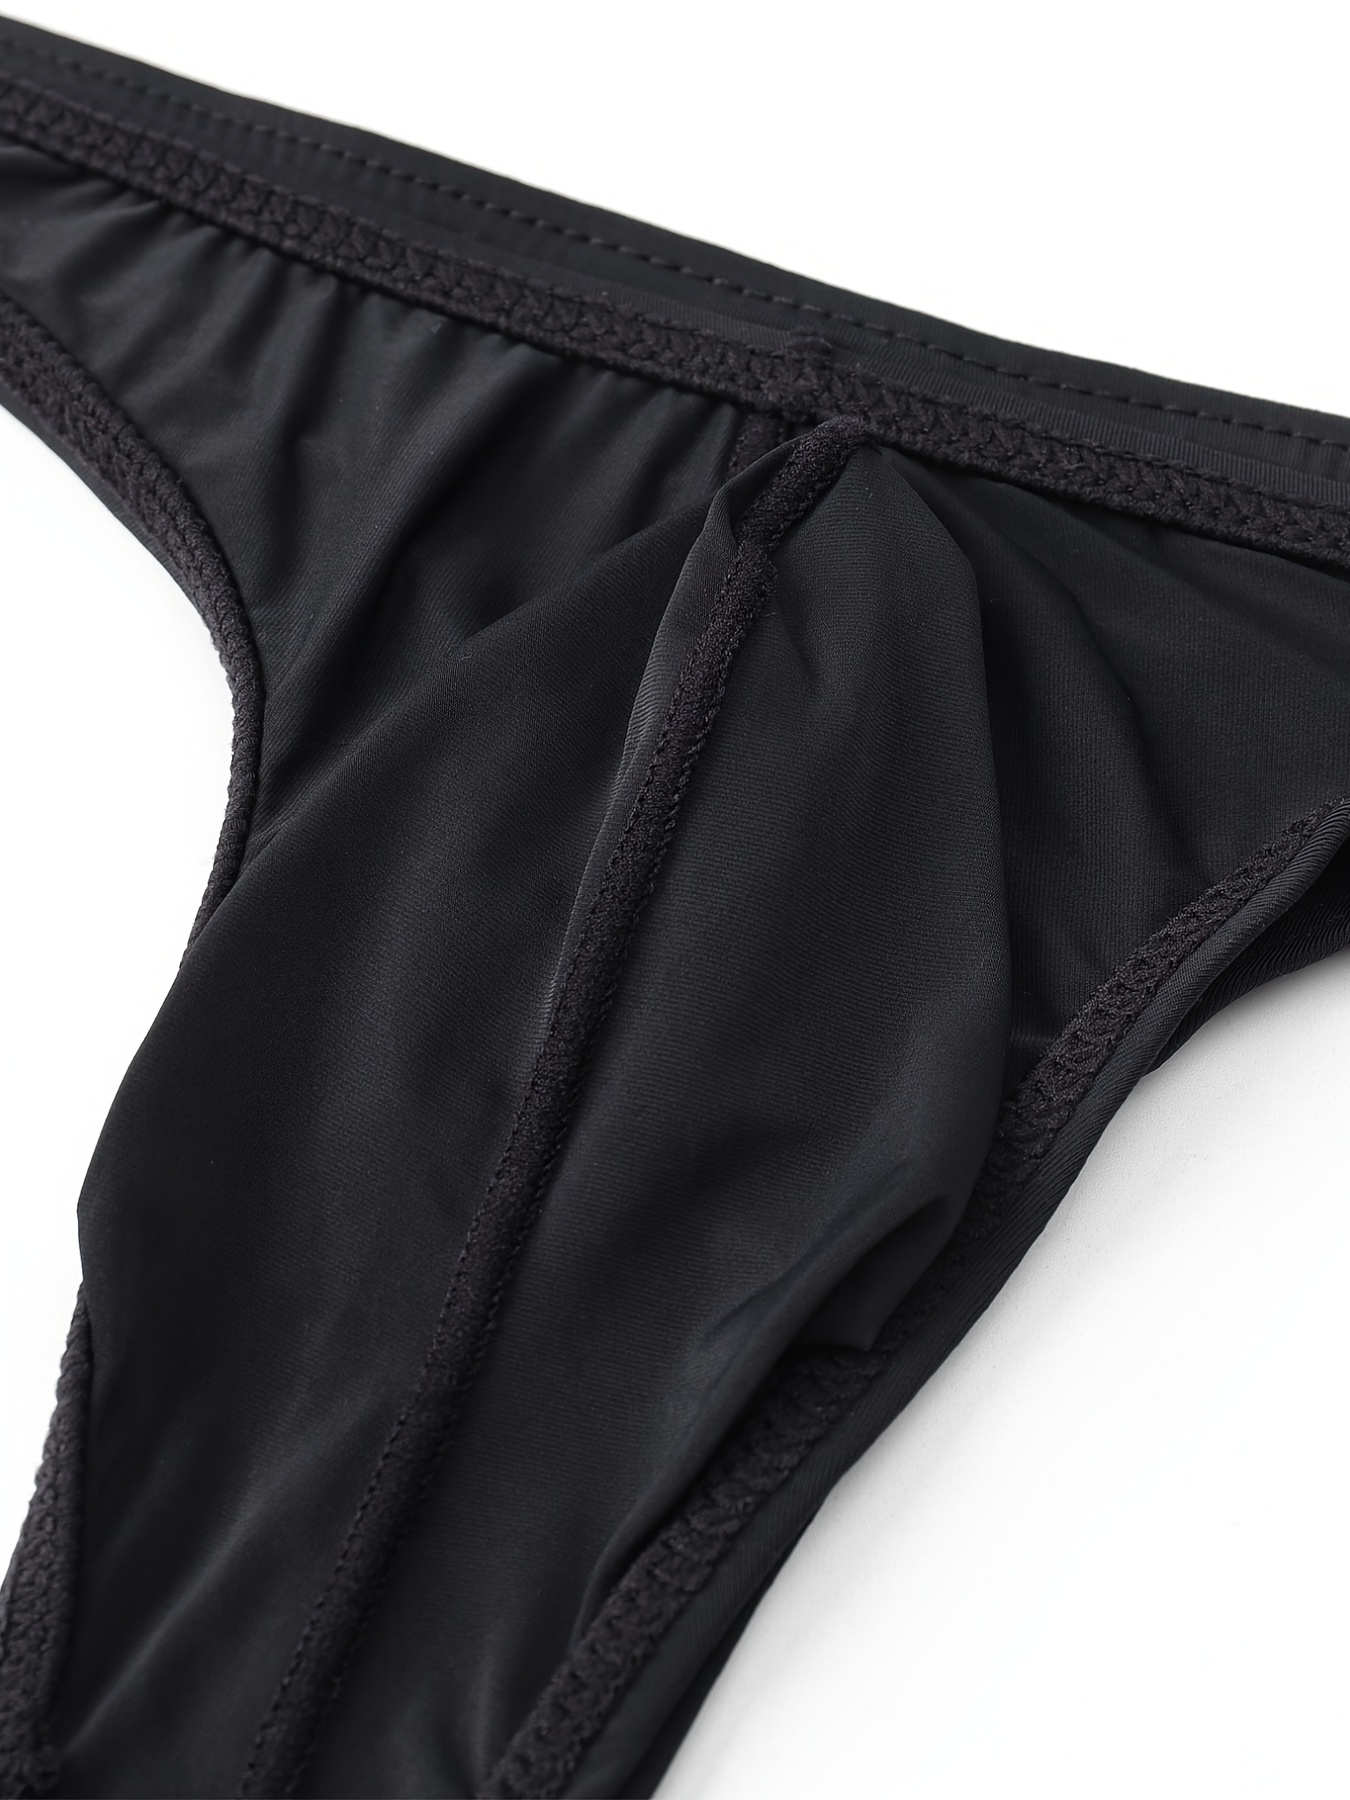 Baixnsj Men's underwear, pure cotton elephant trunk pants